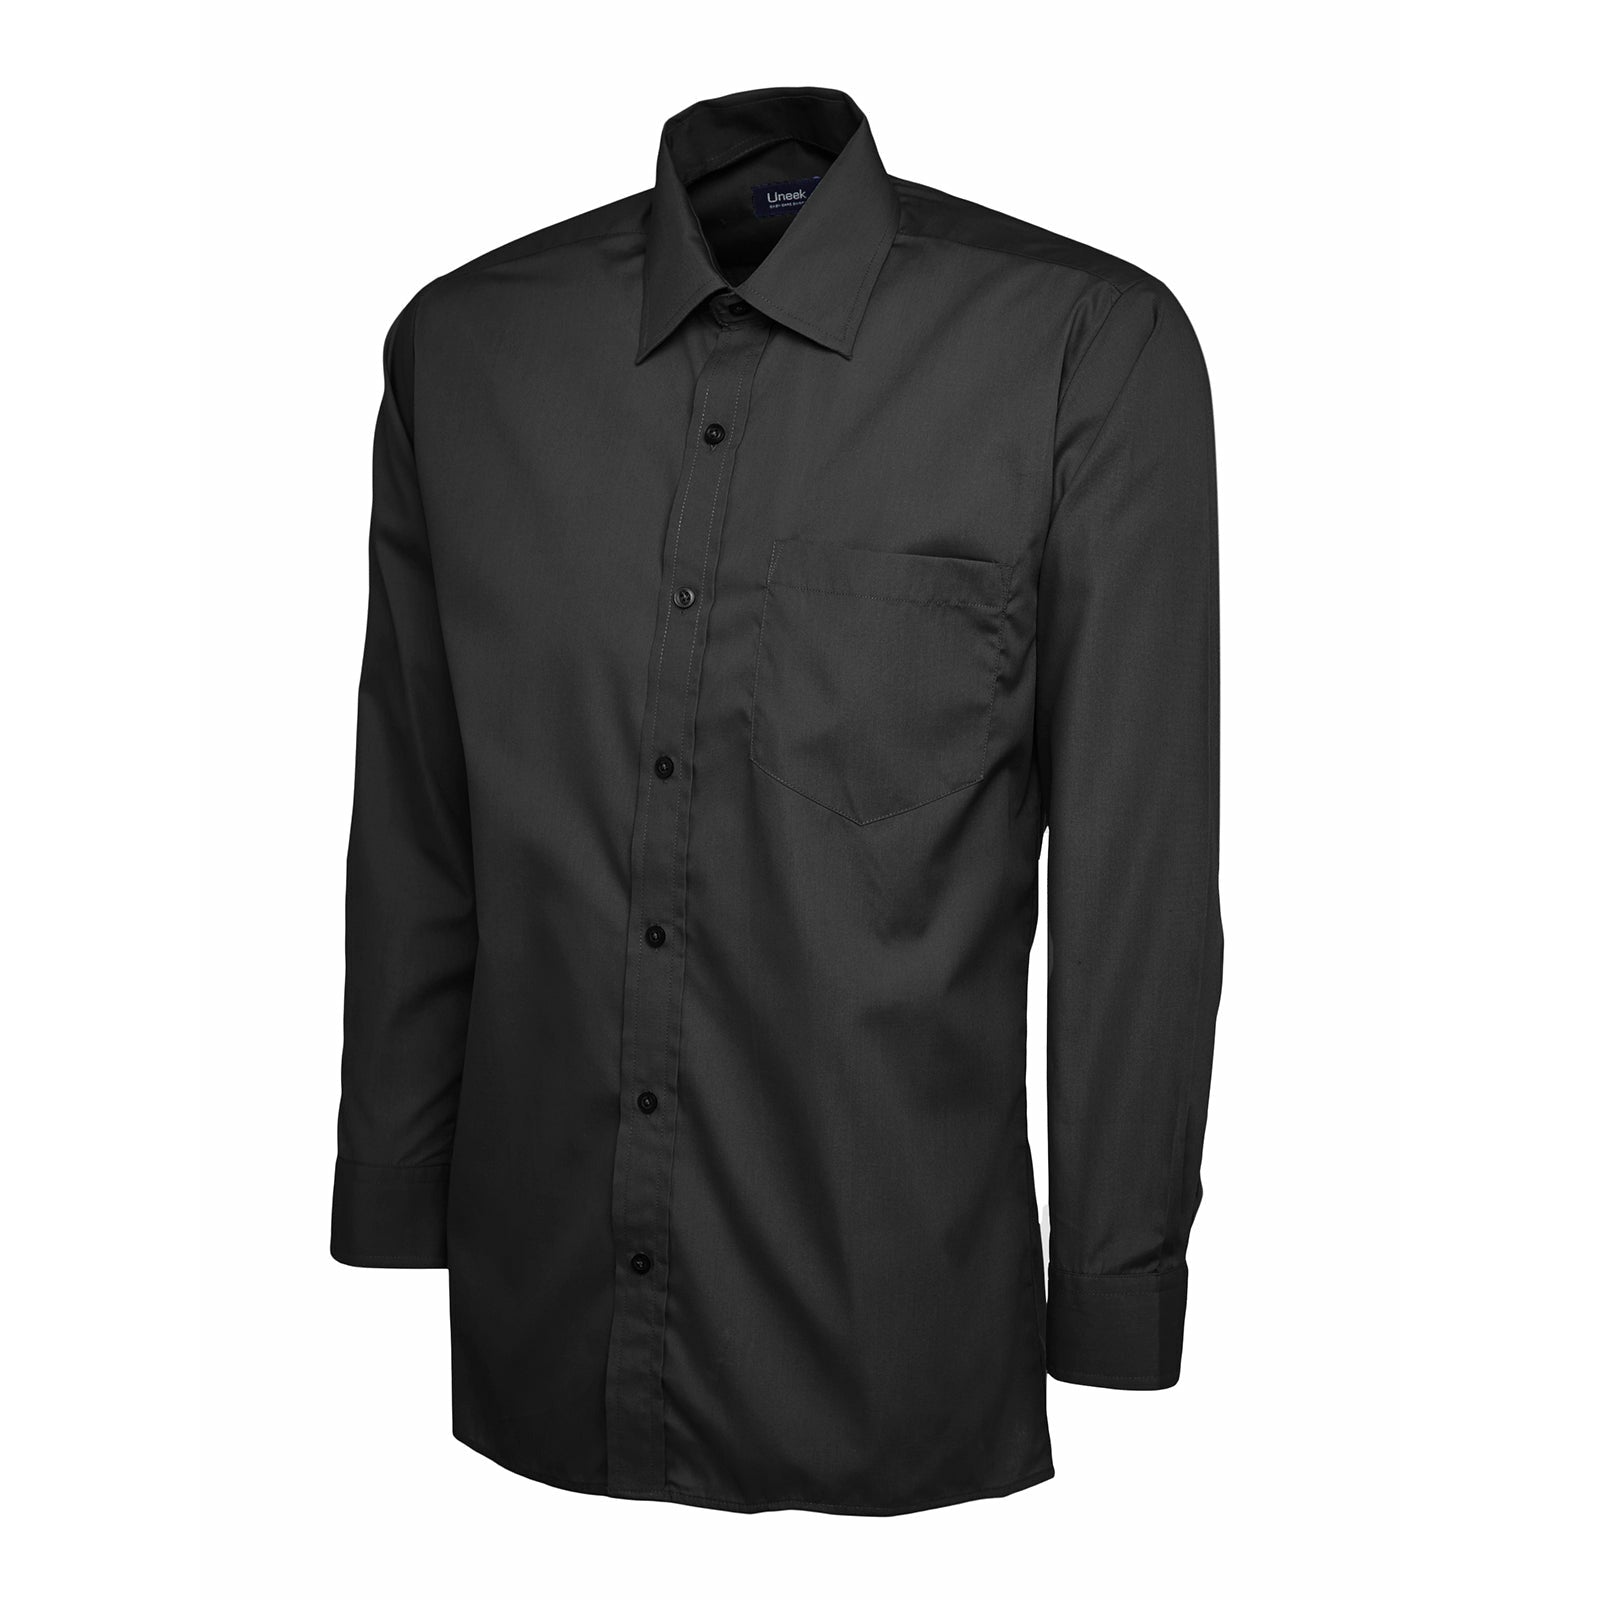 Mens Poplin Full Sleeve Shirt (14.5 - 16.5) - Black